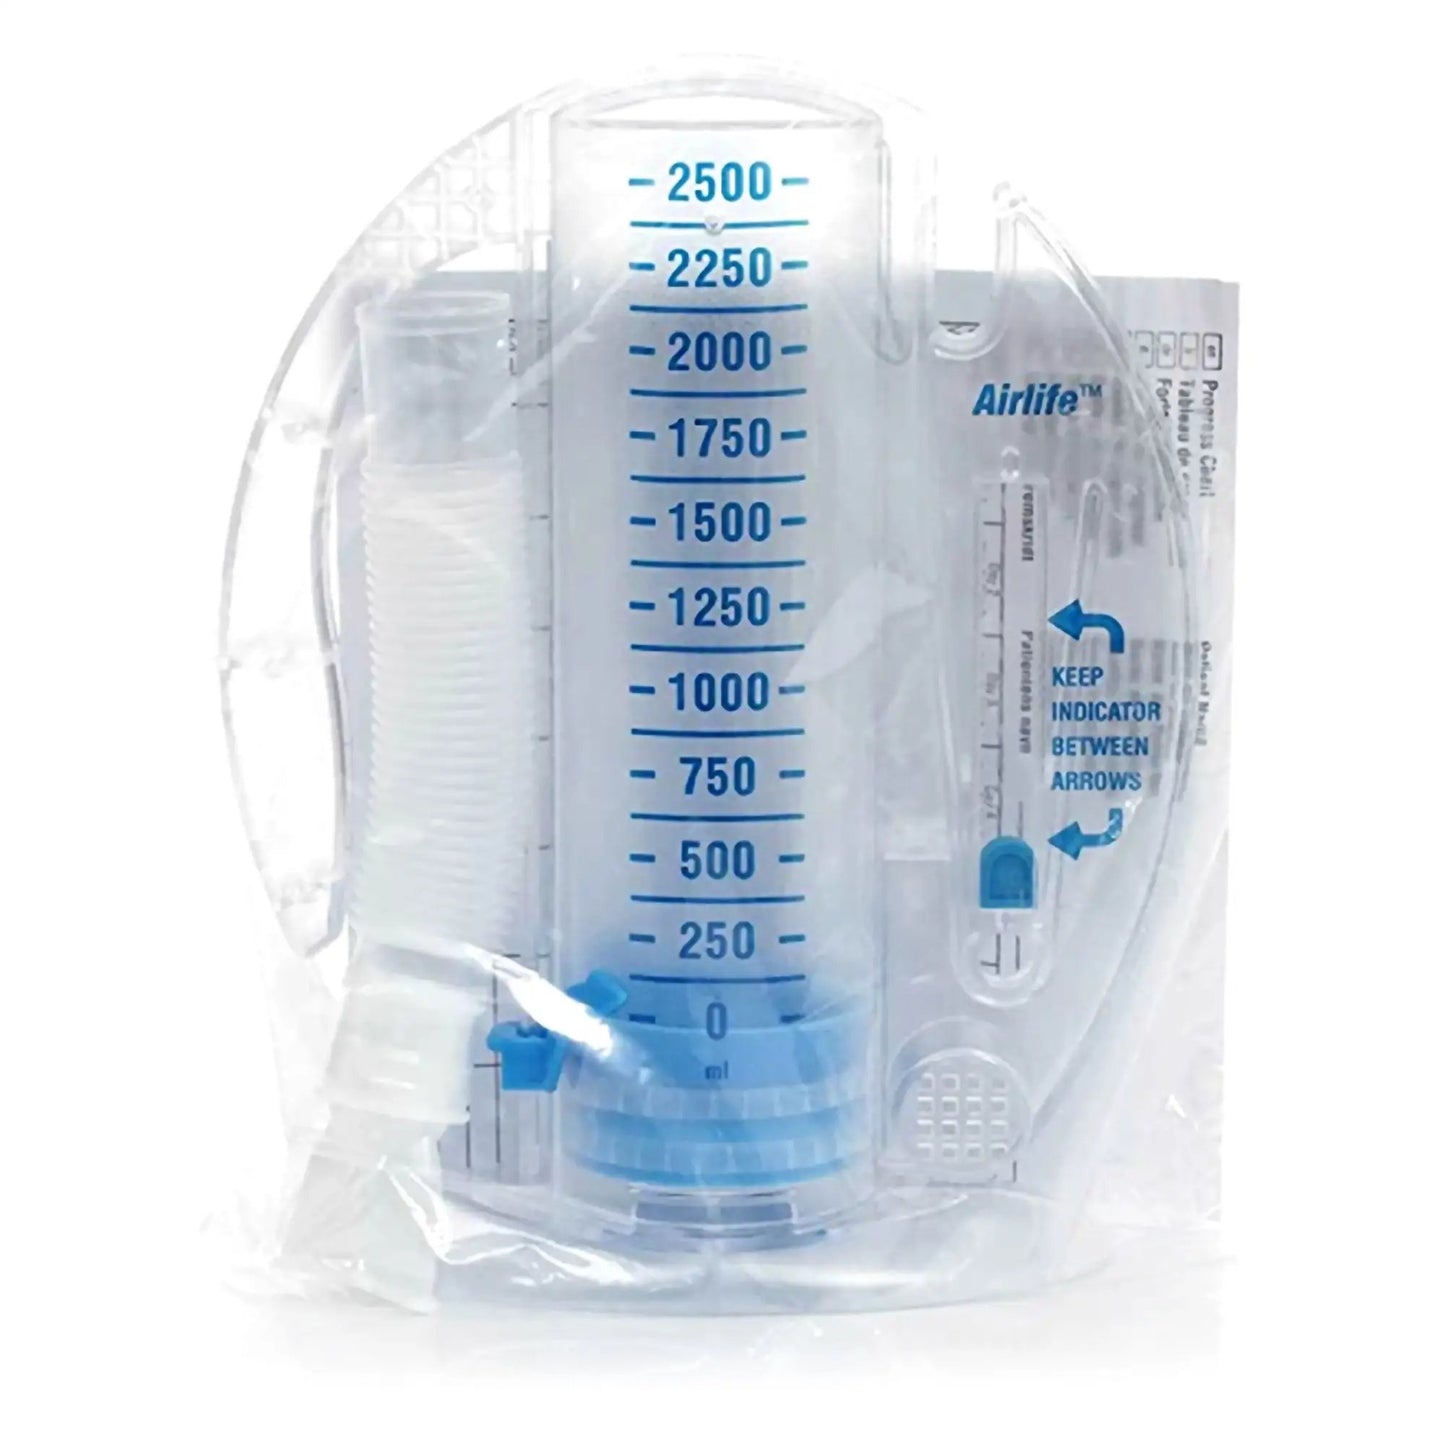 Vyaire Medical AirLife Manual Spirometer